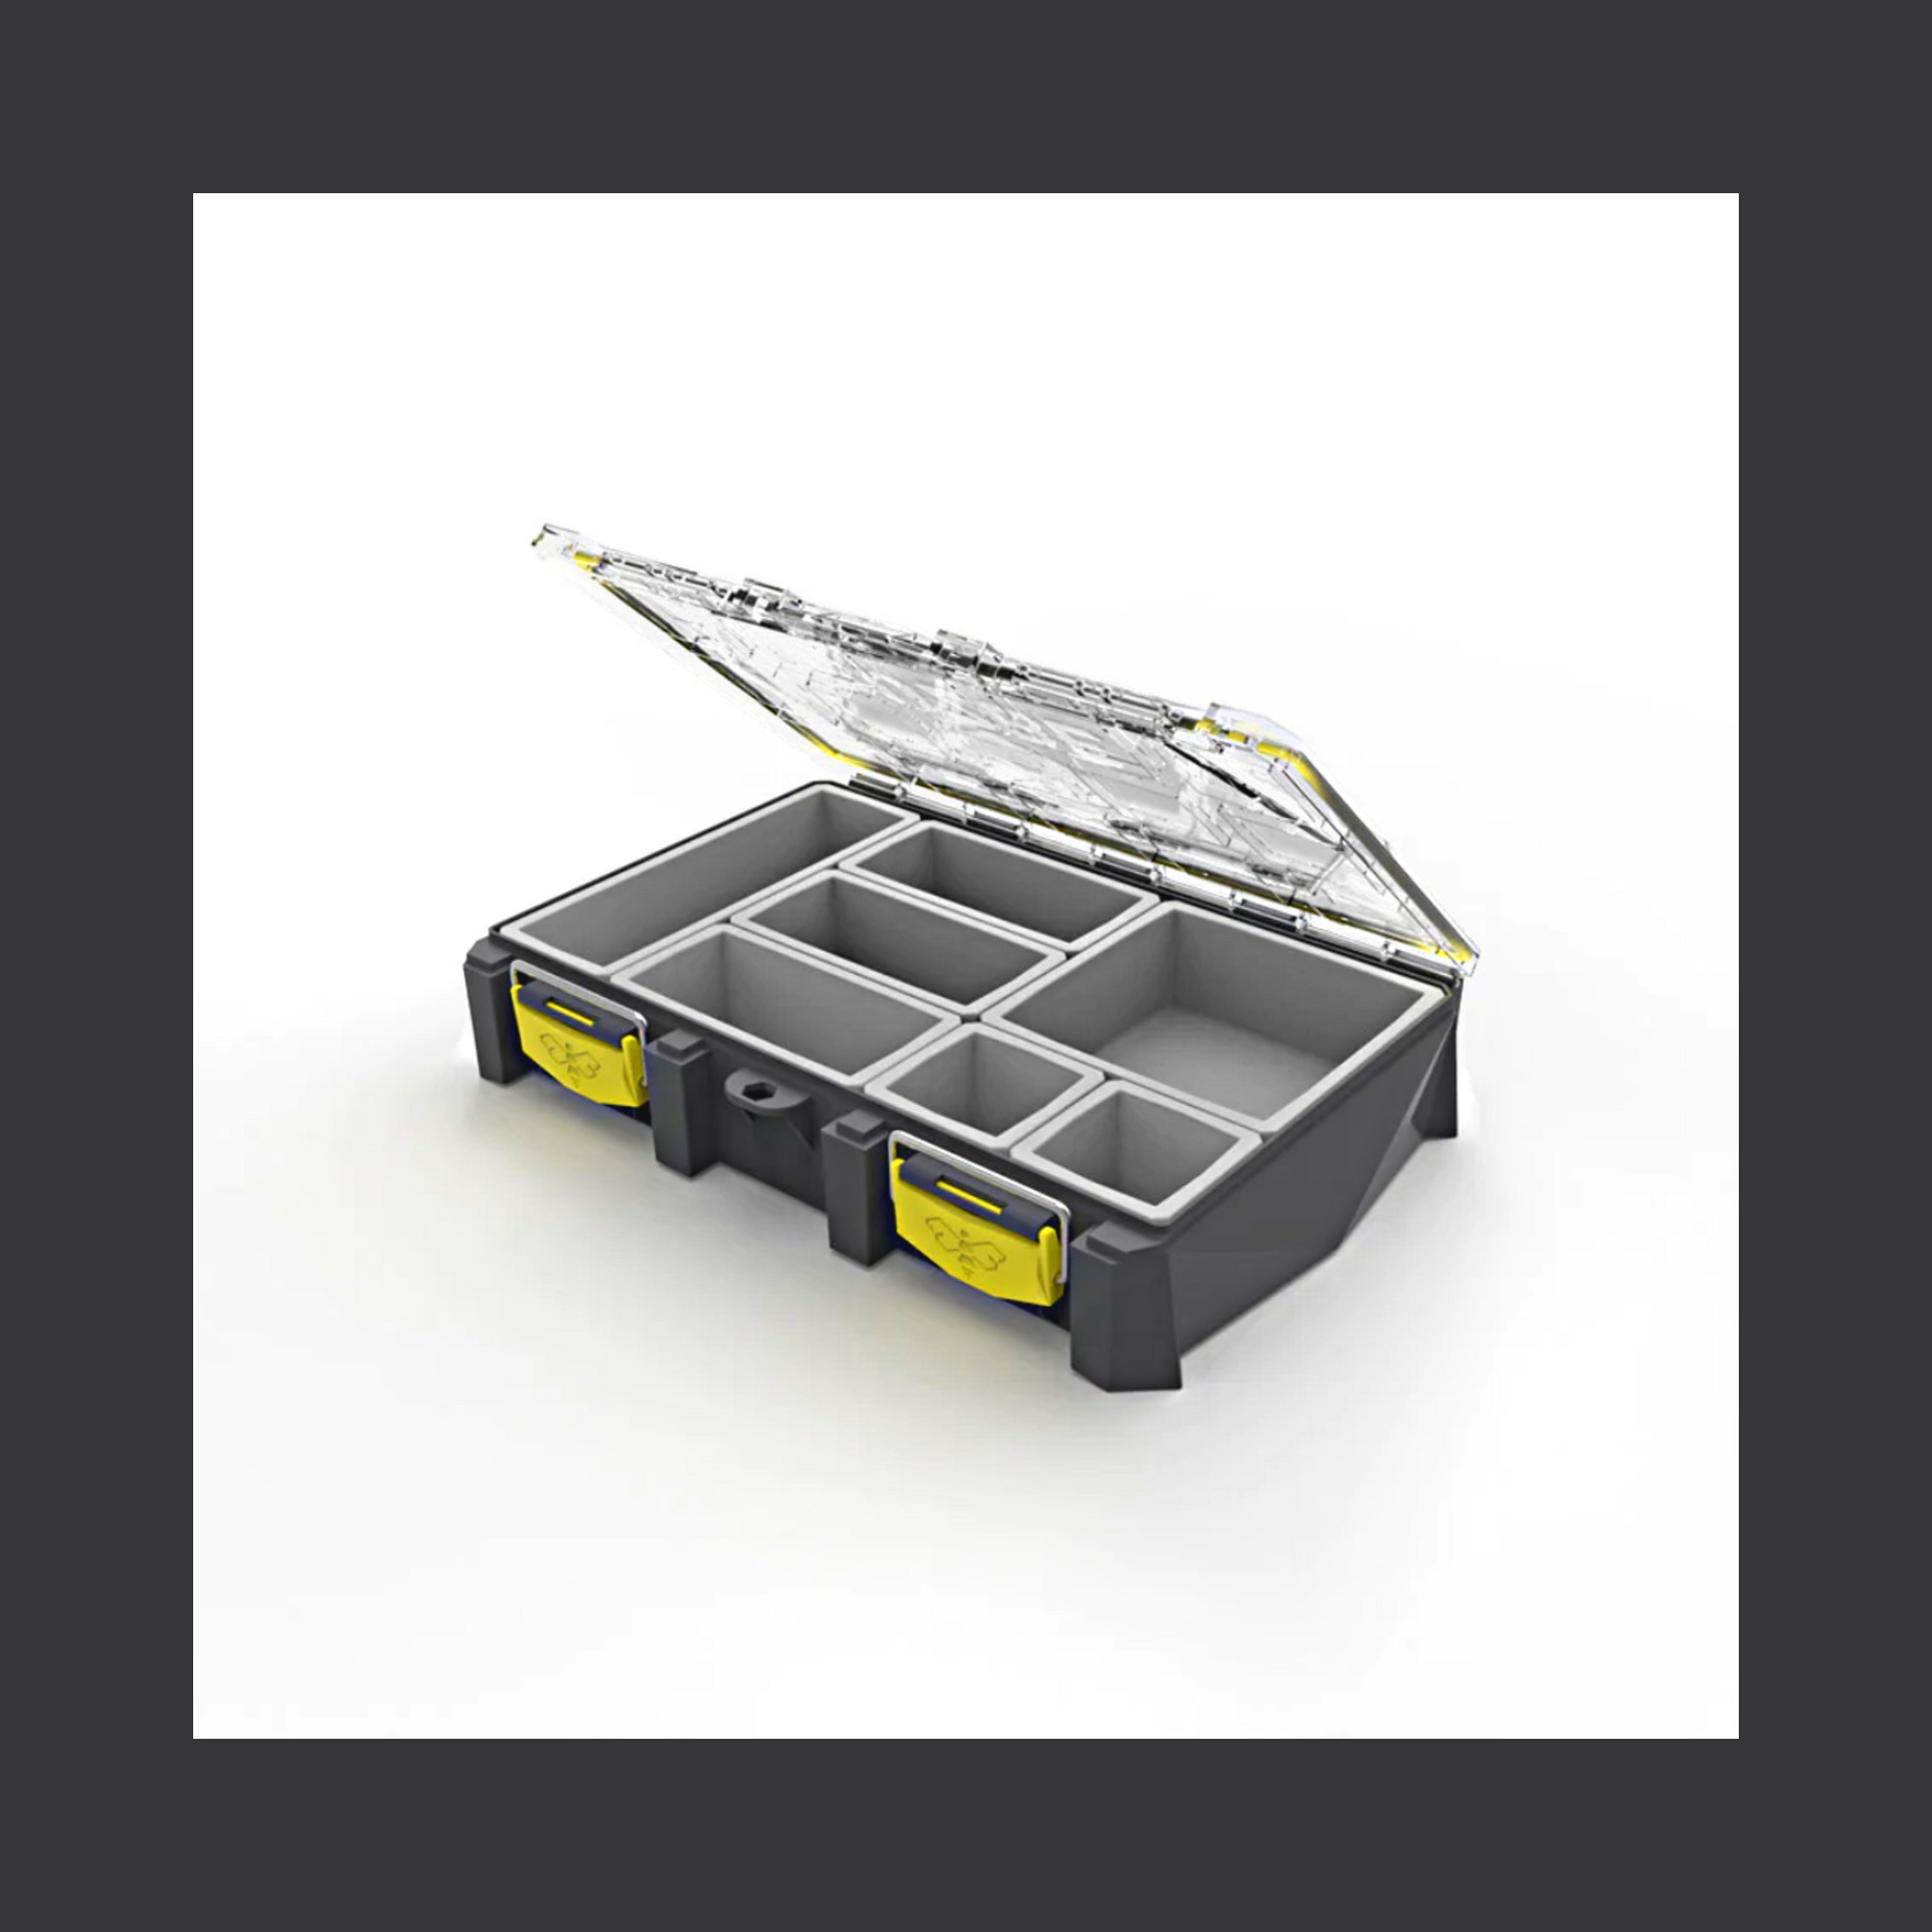 Buzbe Modular Customizable Bins 2x2, Buzbe Tackle Box Component